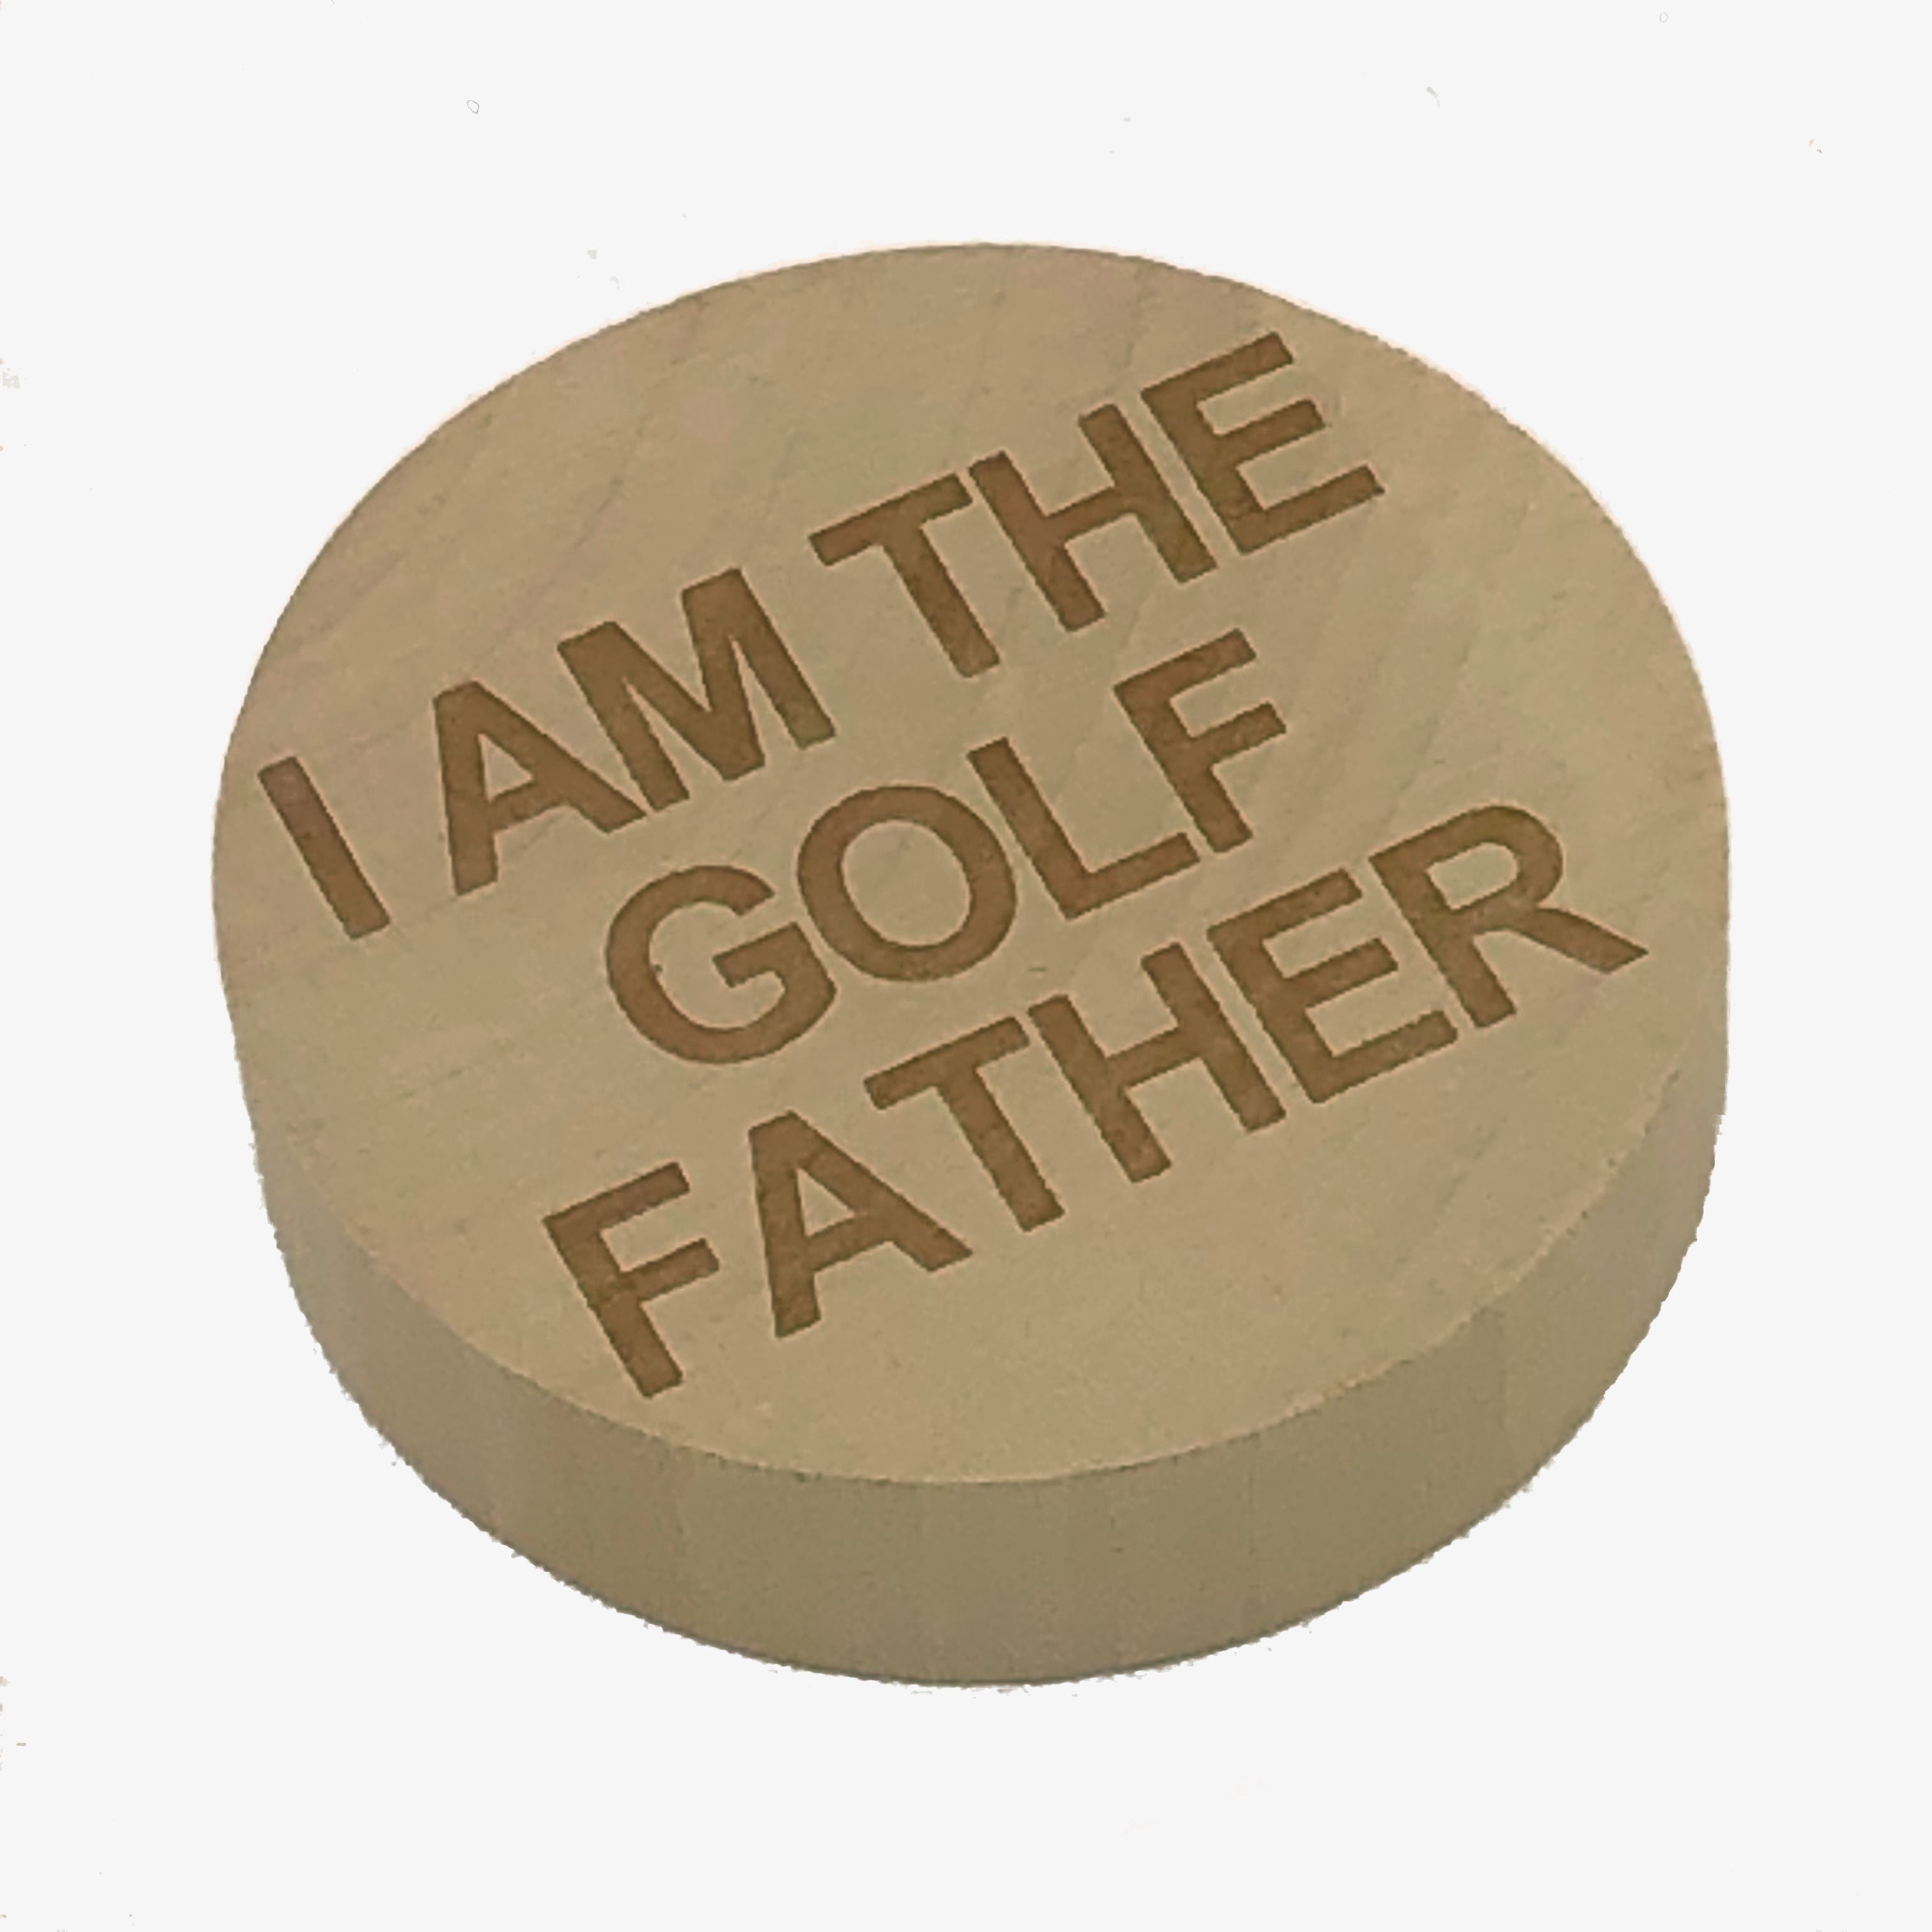 Wooden fridge magnet bottle opener - golf - i am the golf father